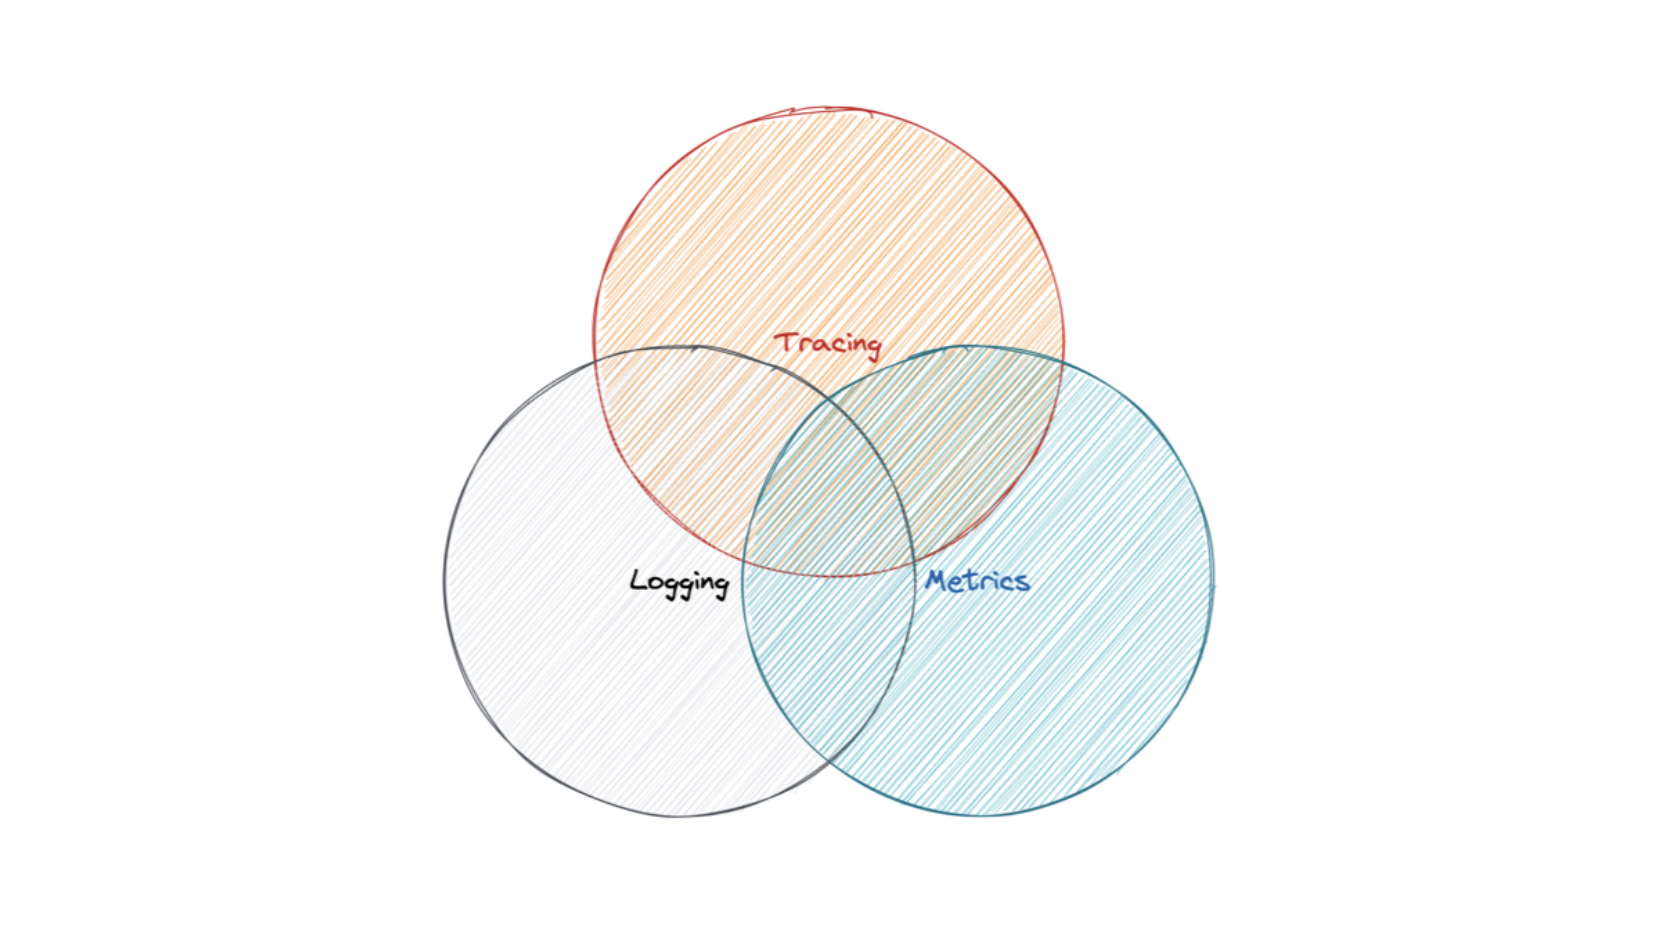 Metrics, Logging and Tracing Relationship Diagram